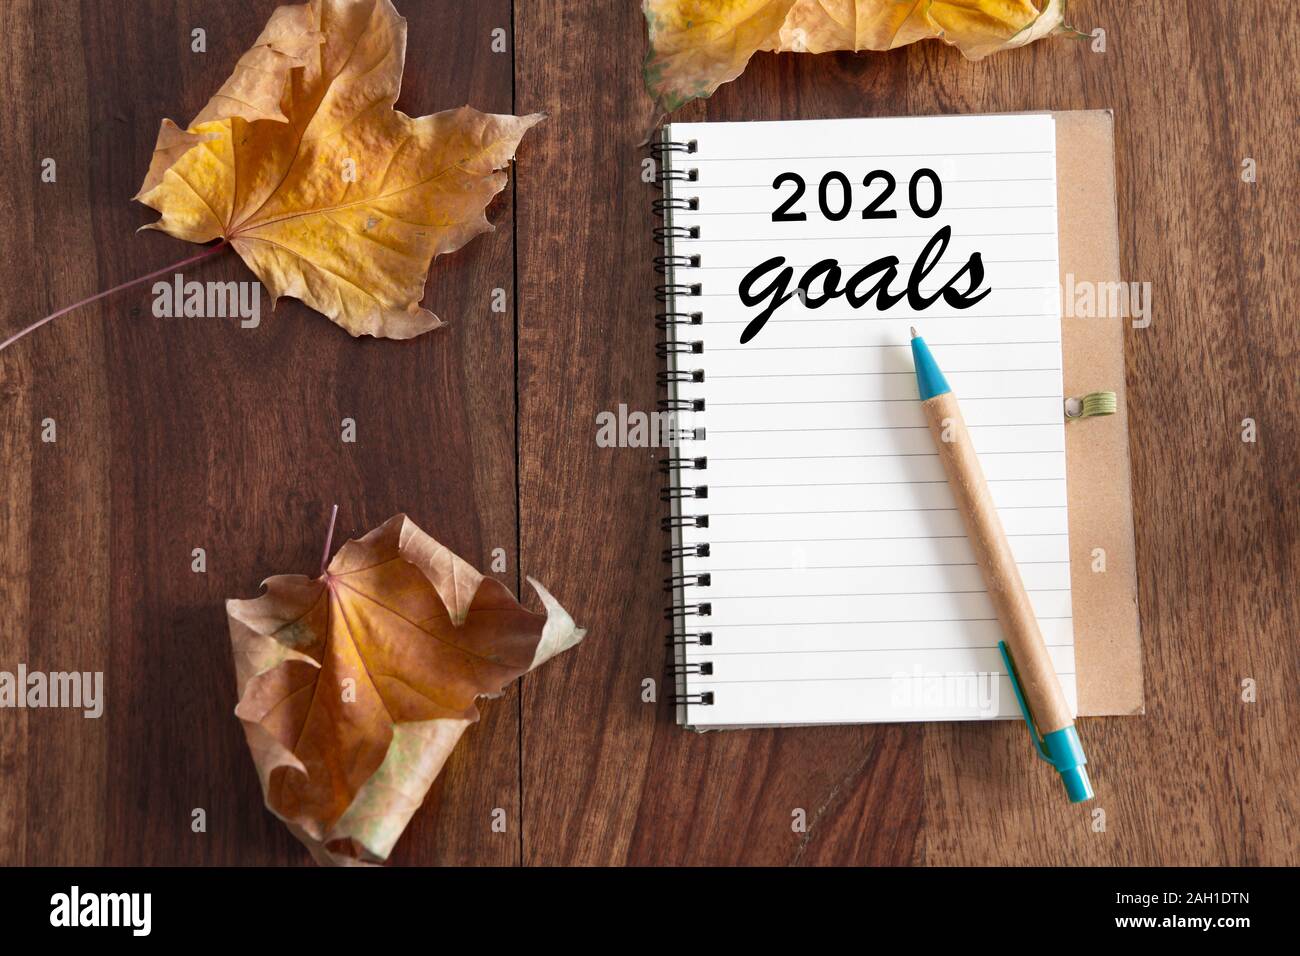 2020 goals flat lay diary on table Stock Photo